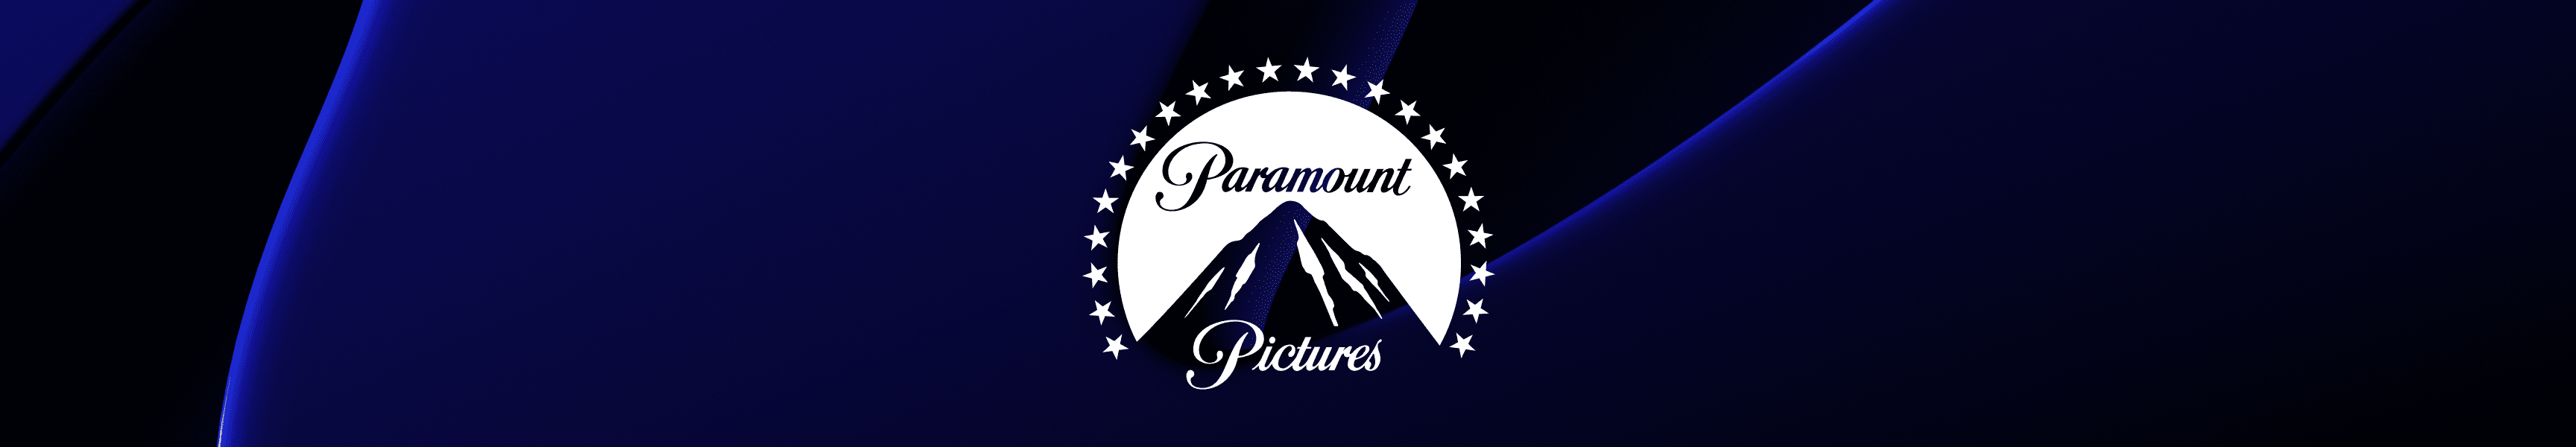 Paramount Pictures Glassware